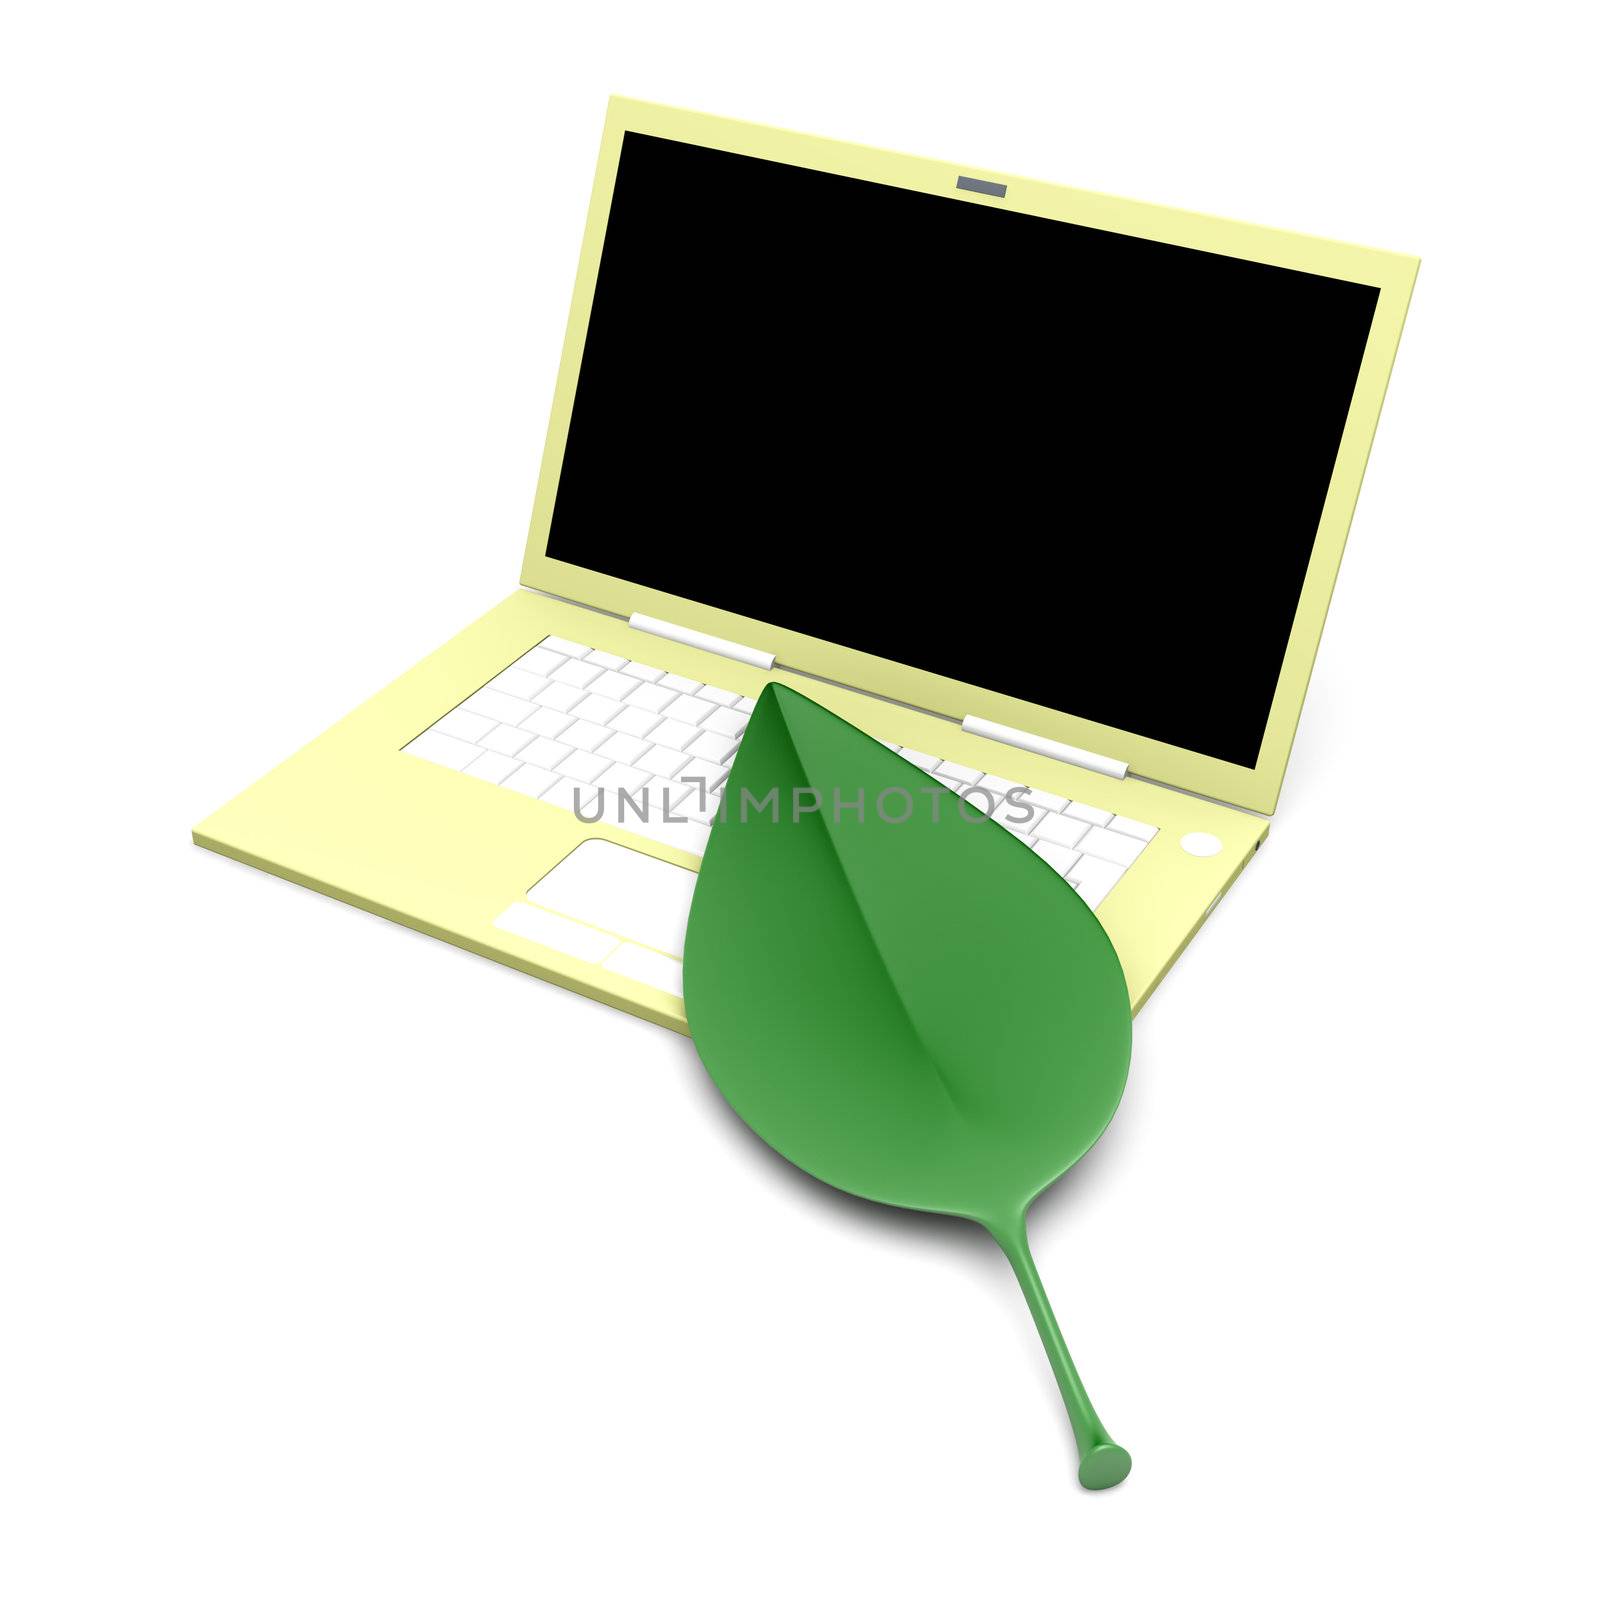 Ecologic Laptop by Spectral